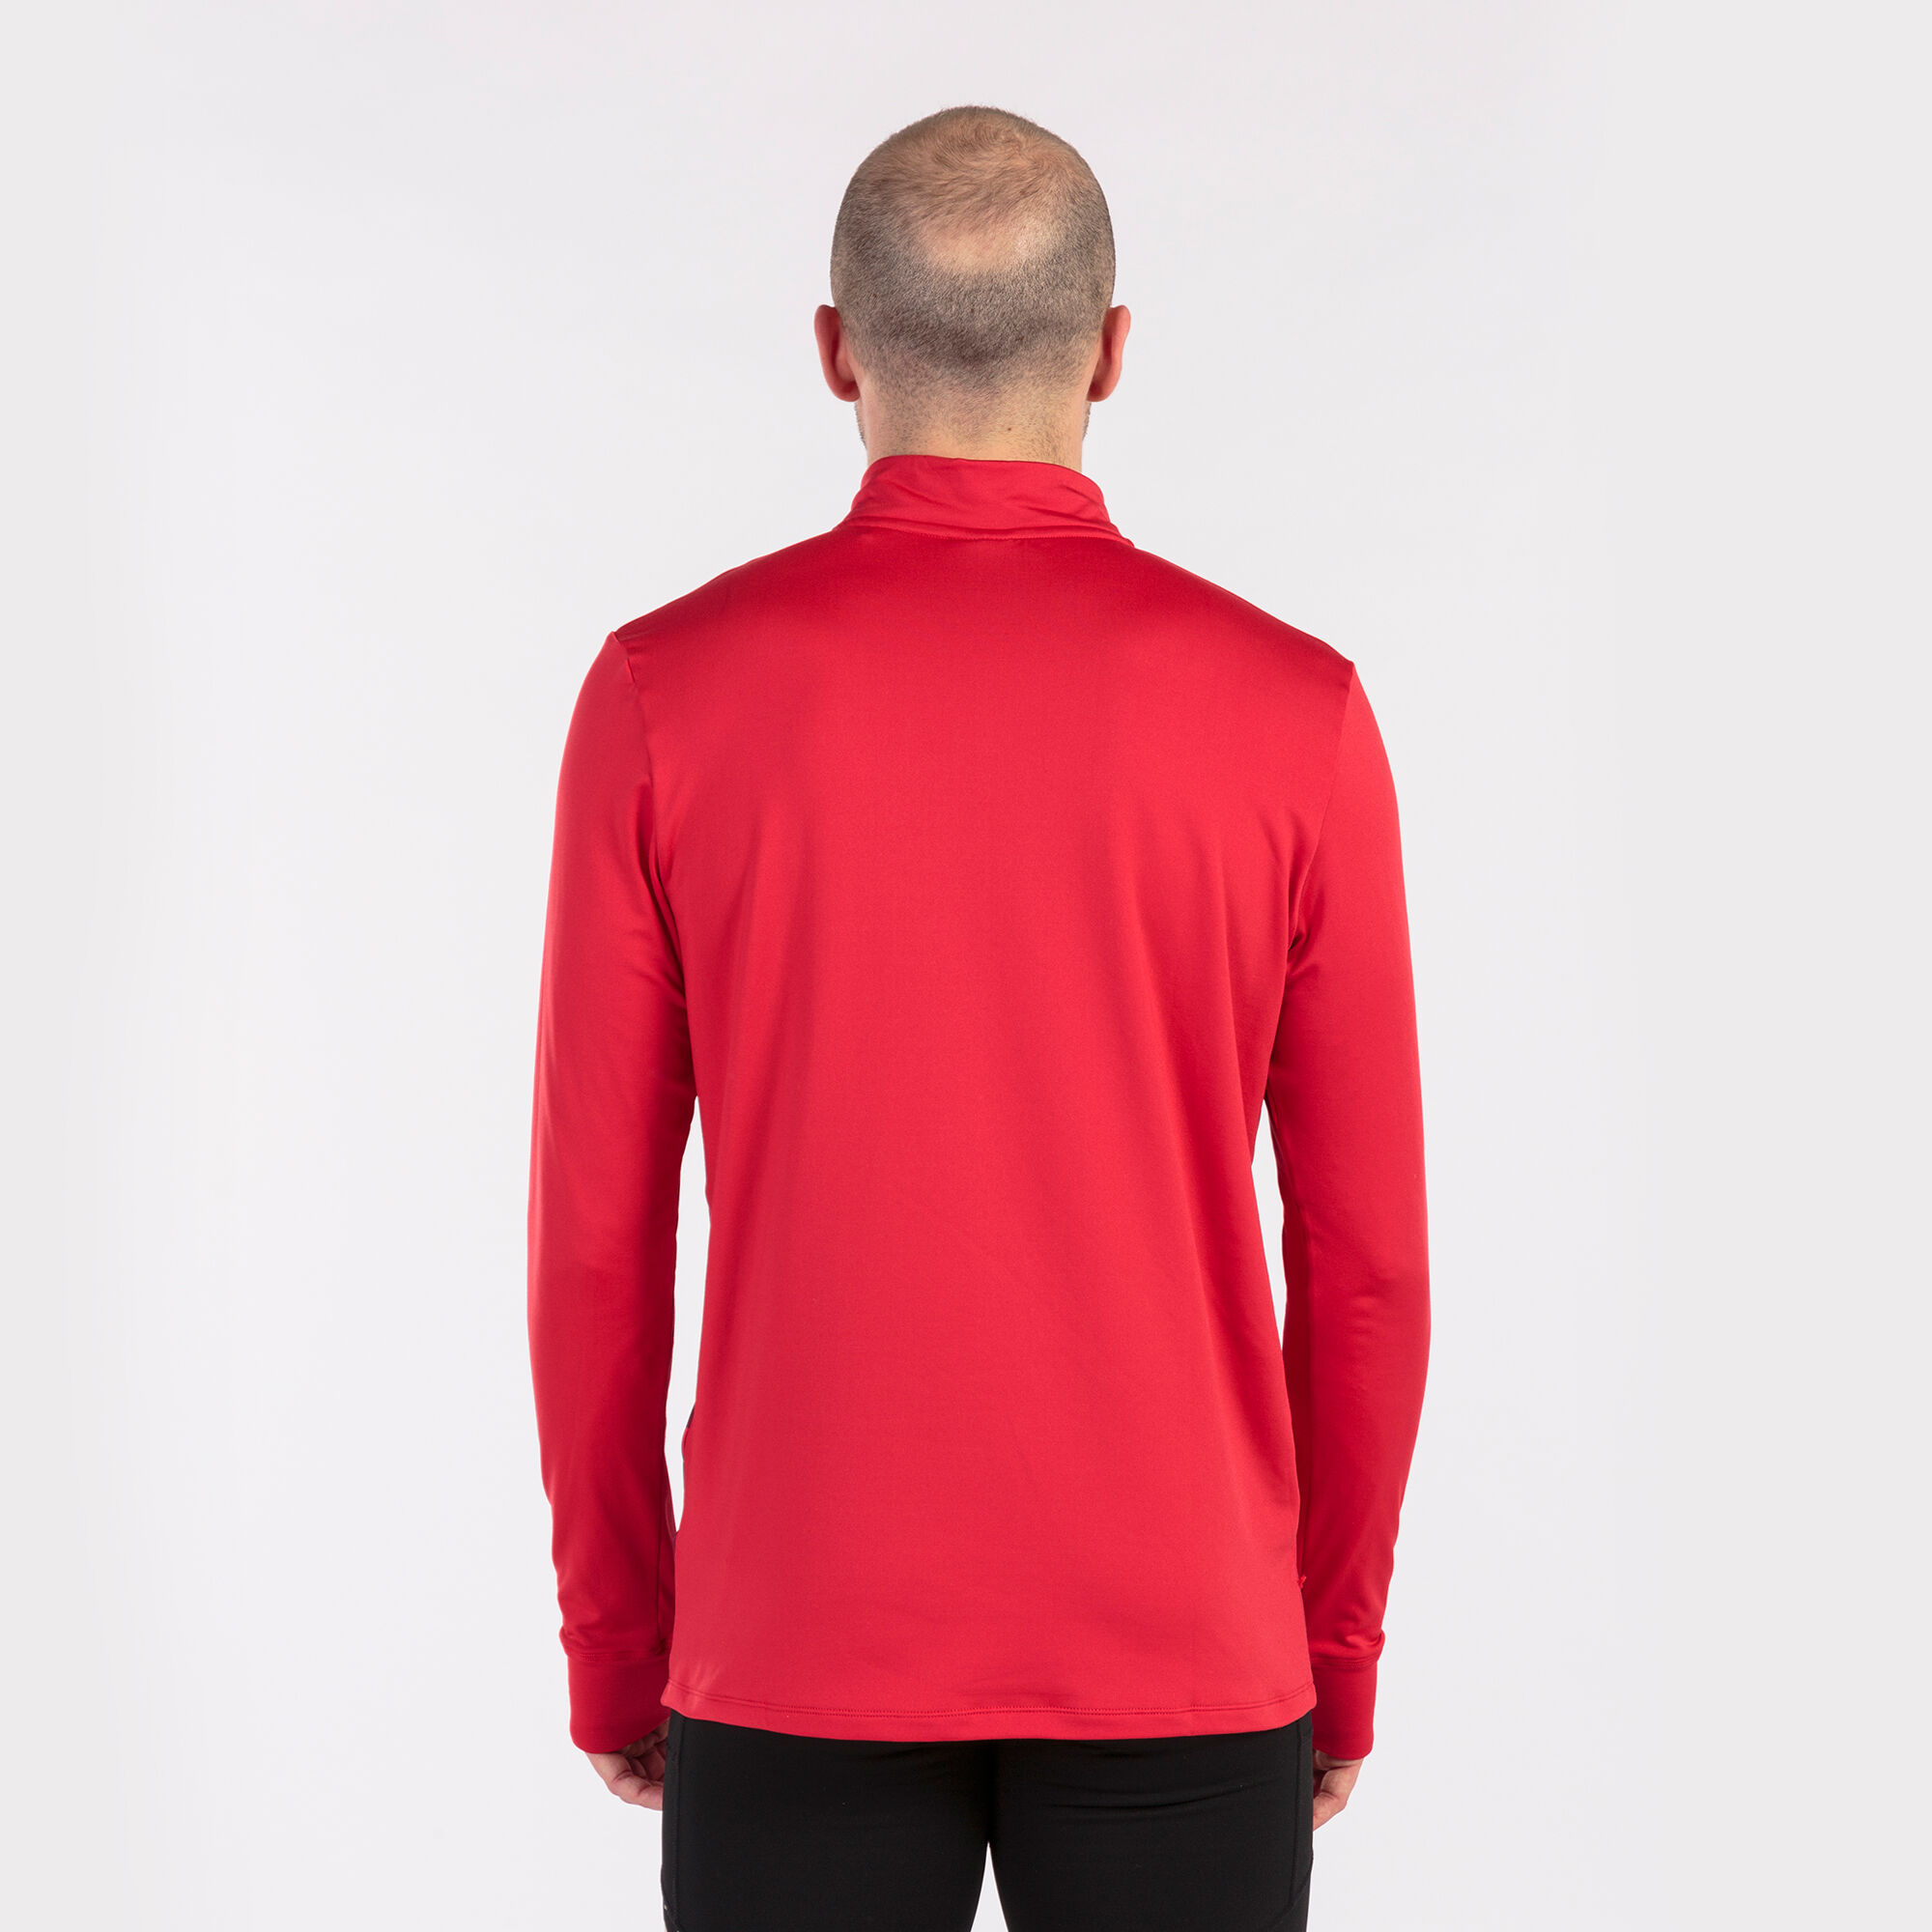 Sweatshirt man Elite VIII red